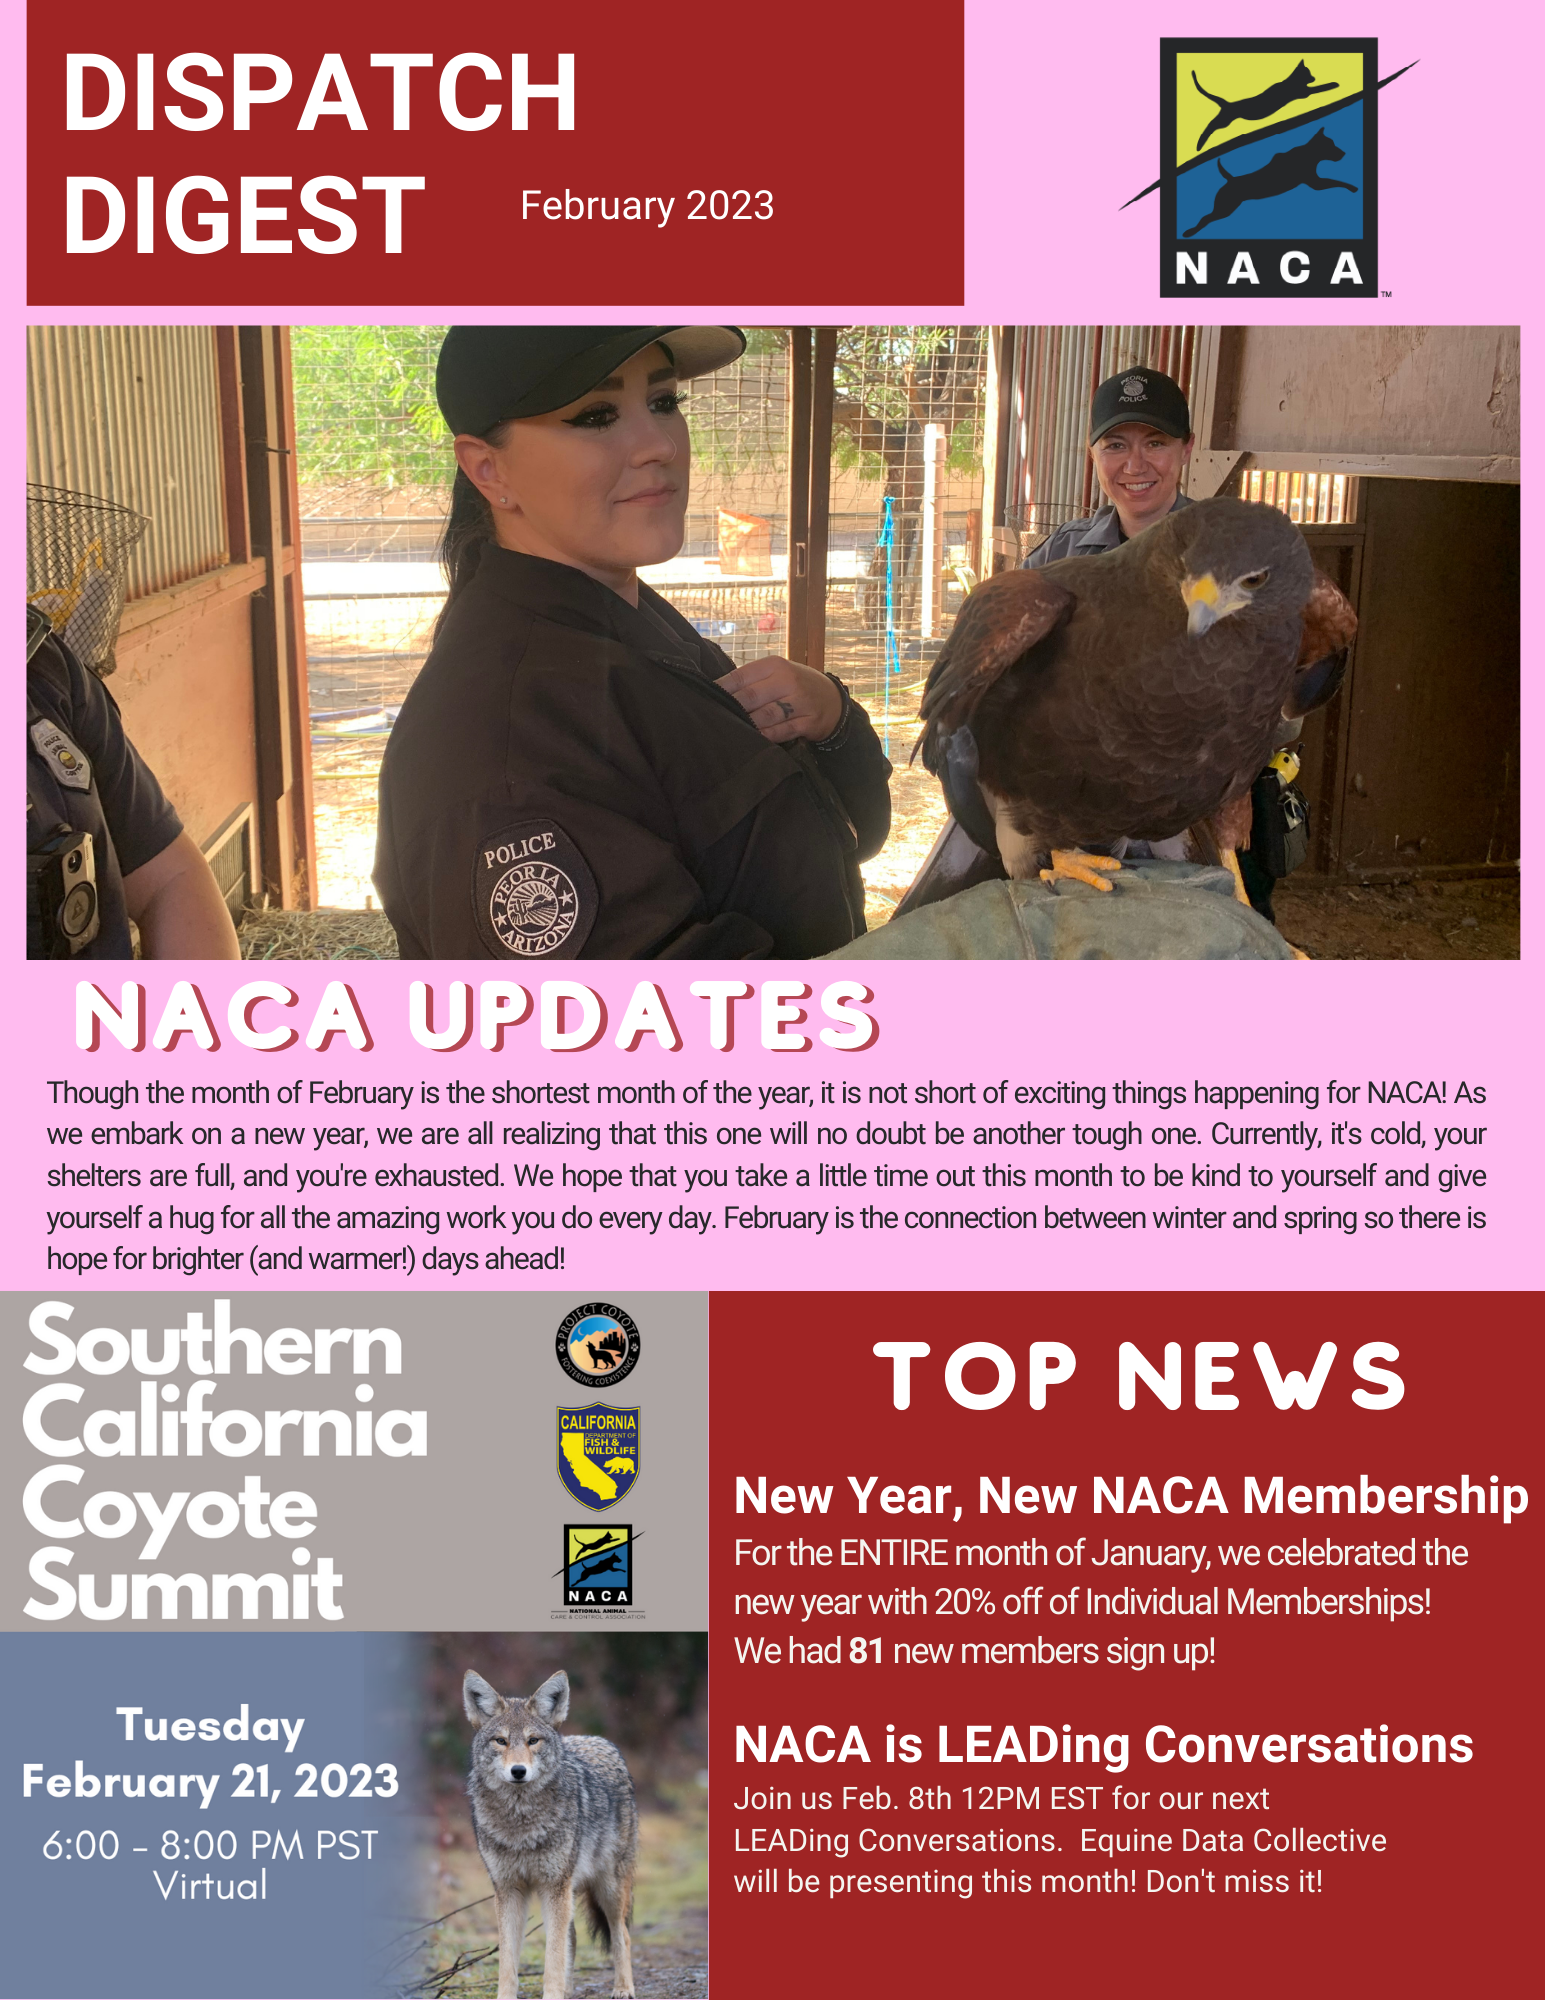 NACA Dispatch Digest - January 2023 Updates & News